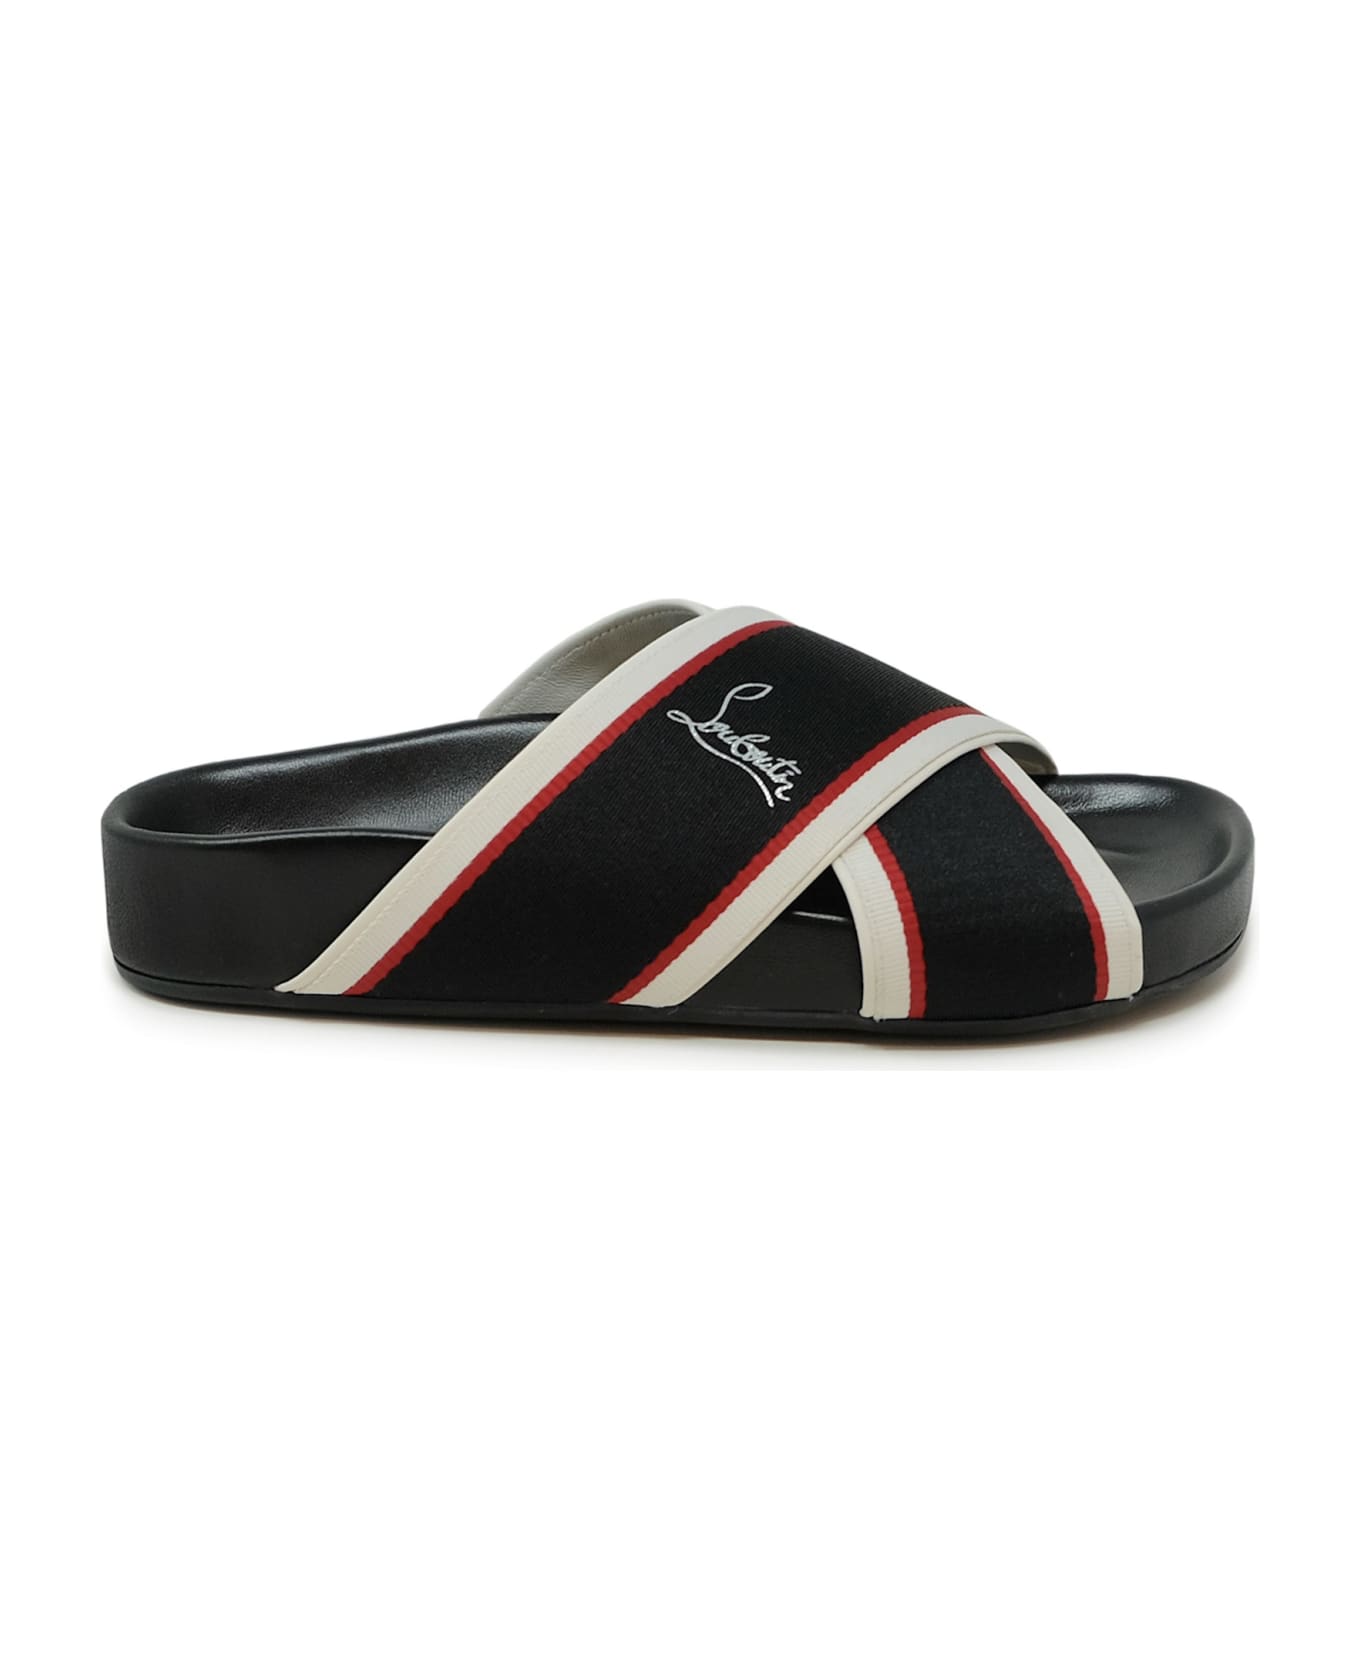 Christian Louboutin Hot Cross Bizz Sandals - Black サンダル